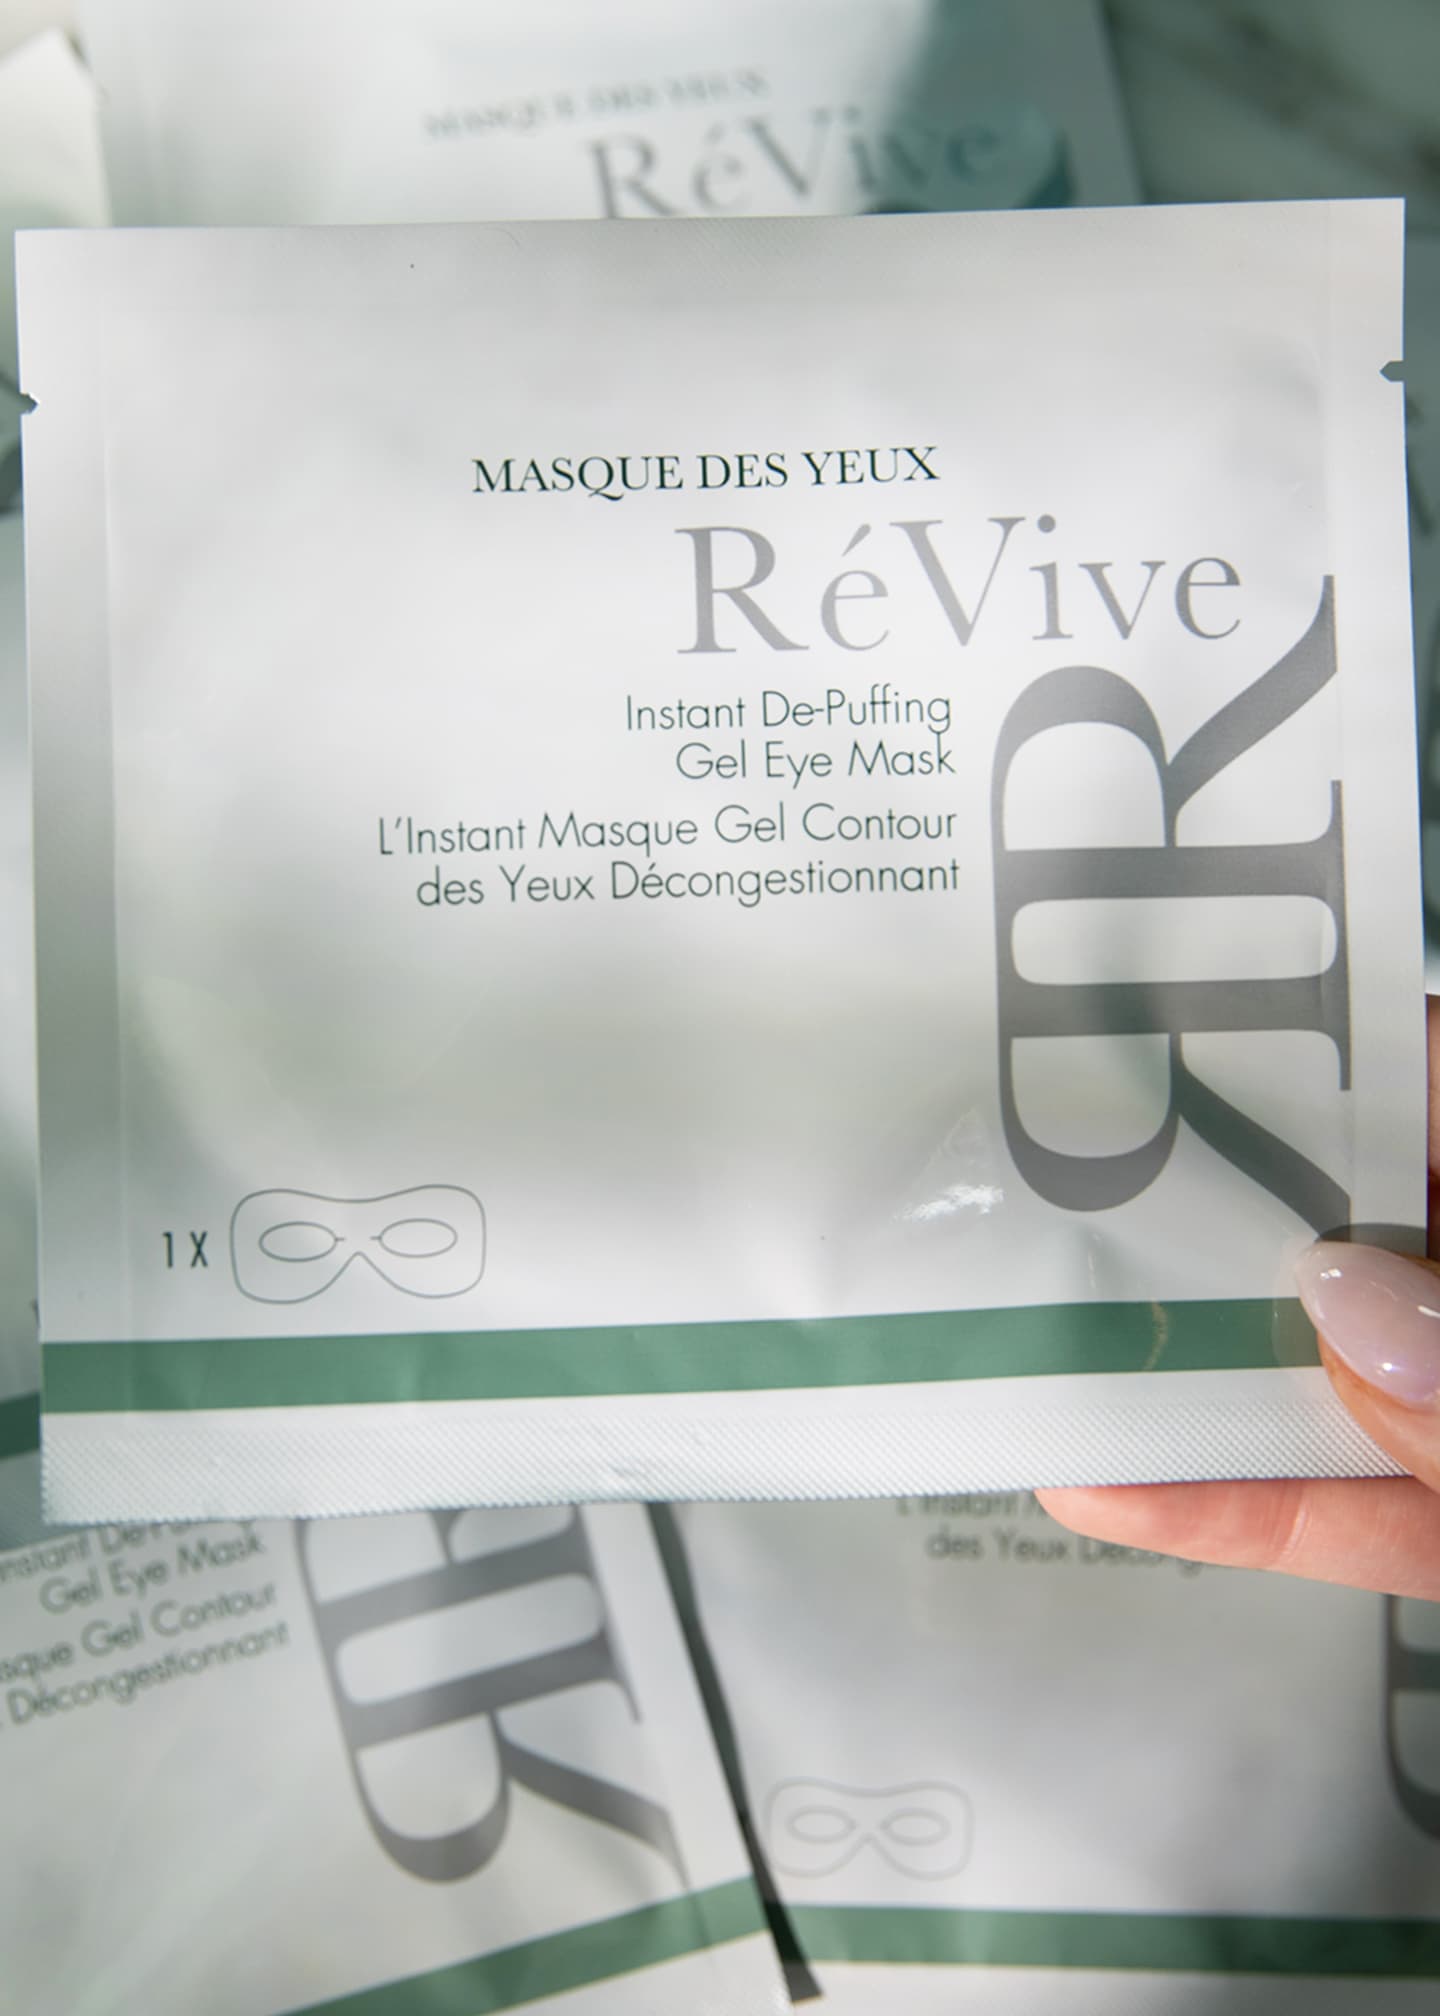 ReVive Masque Des Yeaux Instant De-Puffing Gel Eye Mask, 6 Pack